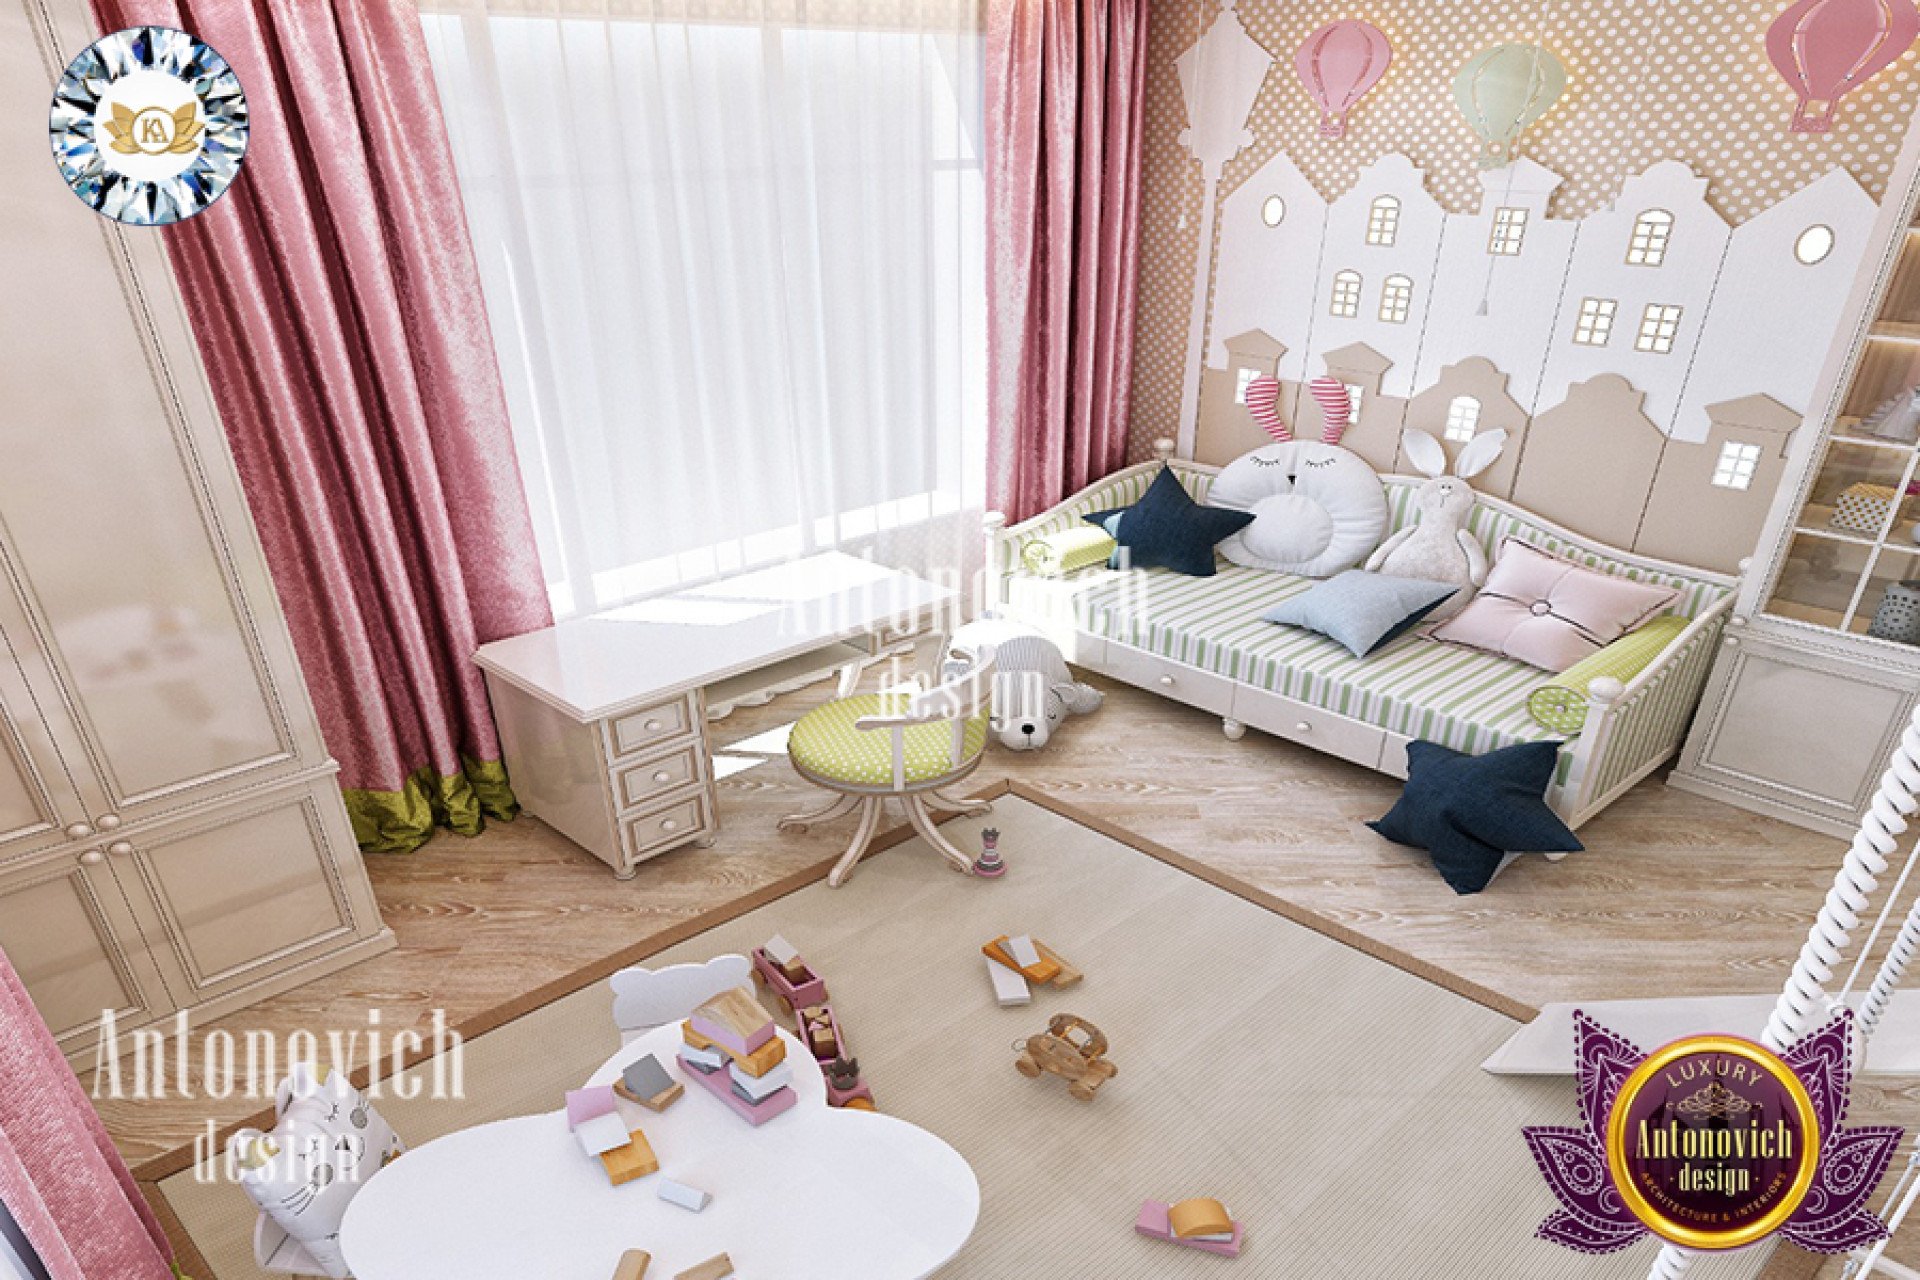 DÉCOR IDEAS FOR KIDS BEDROOM AND PLAYROOM BY KATRINA ANTONOVICH  